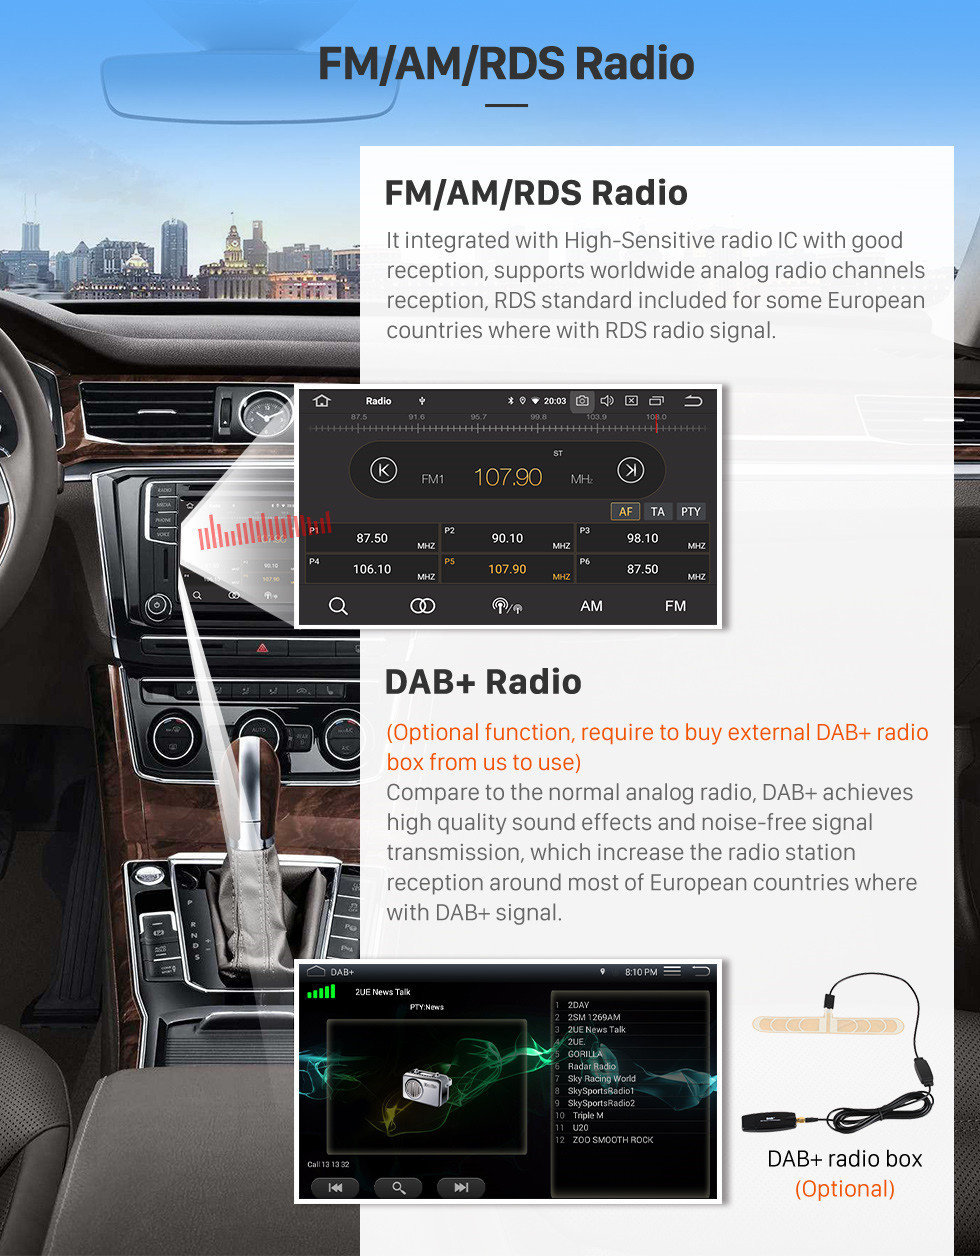 Seicane 2018-2019 chevy Chevrolet Daewoo Matiz / Spark / Baic / Beat Pantalla táctil Android 11.0 9 pulgadas Navegación GPS Radio USB Bluetooth Carplay AUX compatible con DVR OBD2